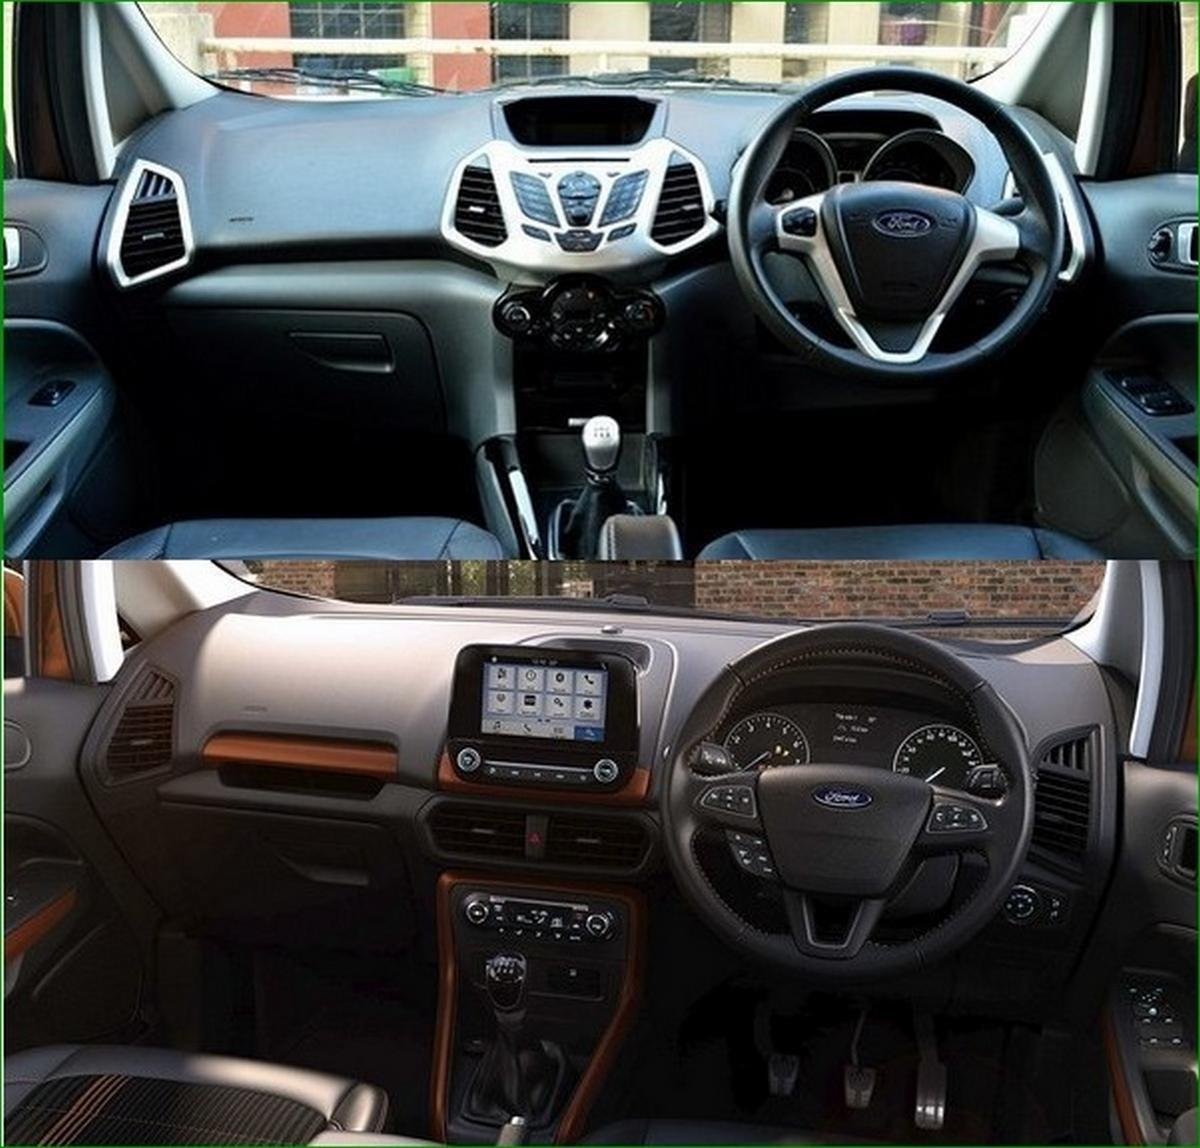 2016 vs 2017 Ford Ecosport, interior look